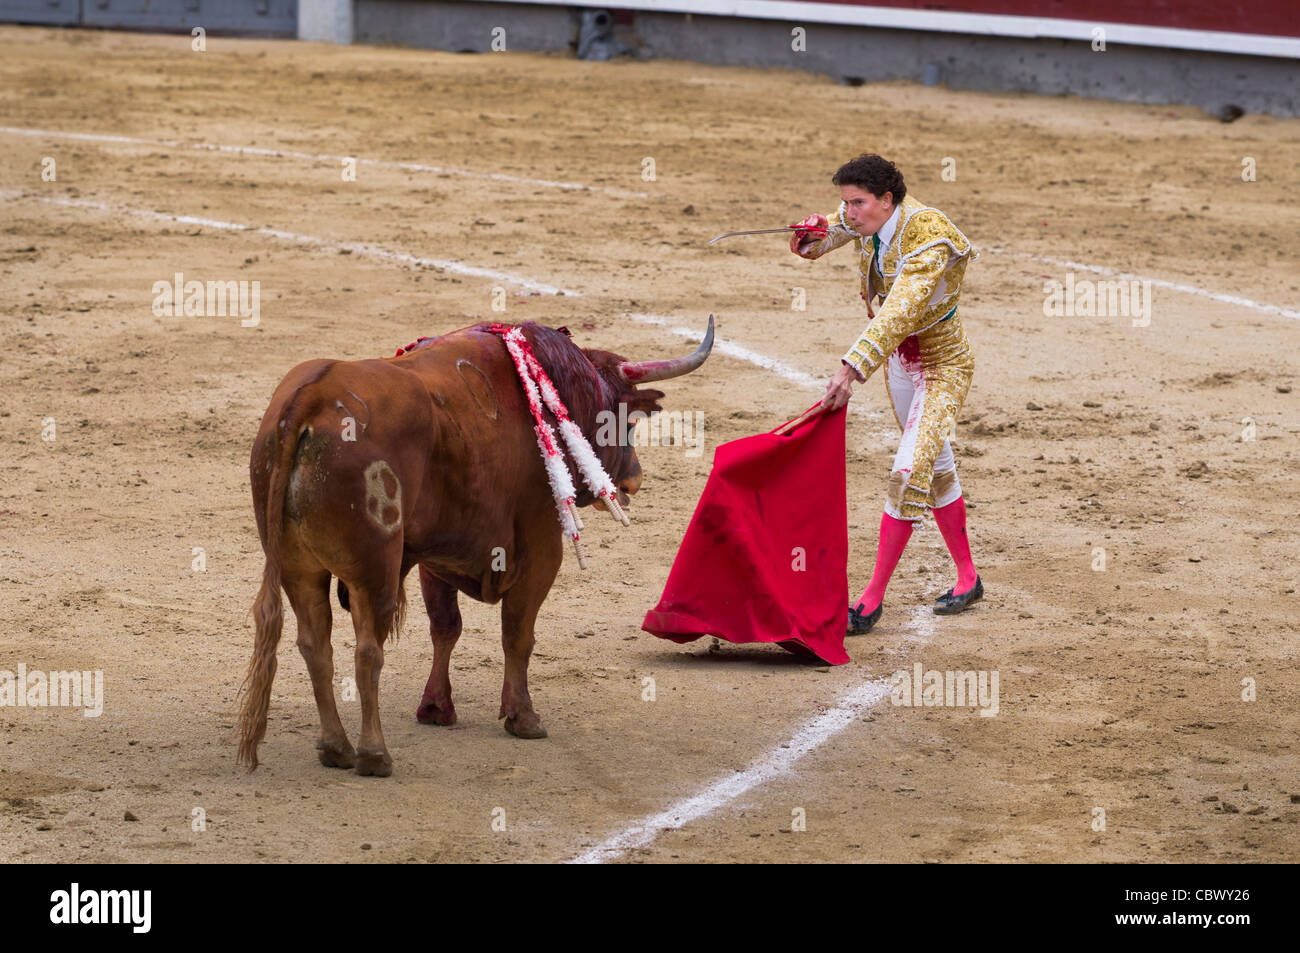 Corrida de toros CORRIDA MADRID ESPAÑA Foto de stock